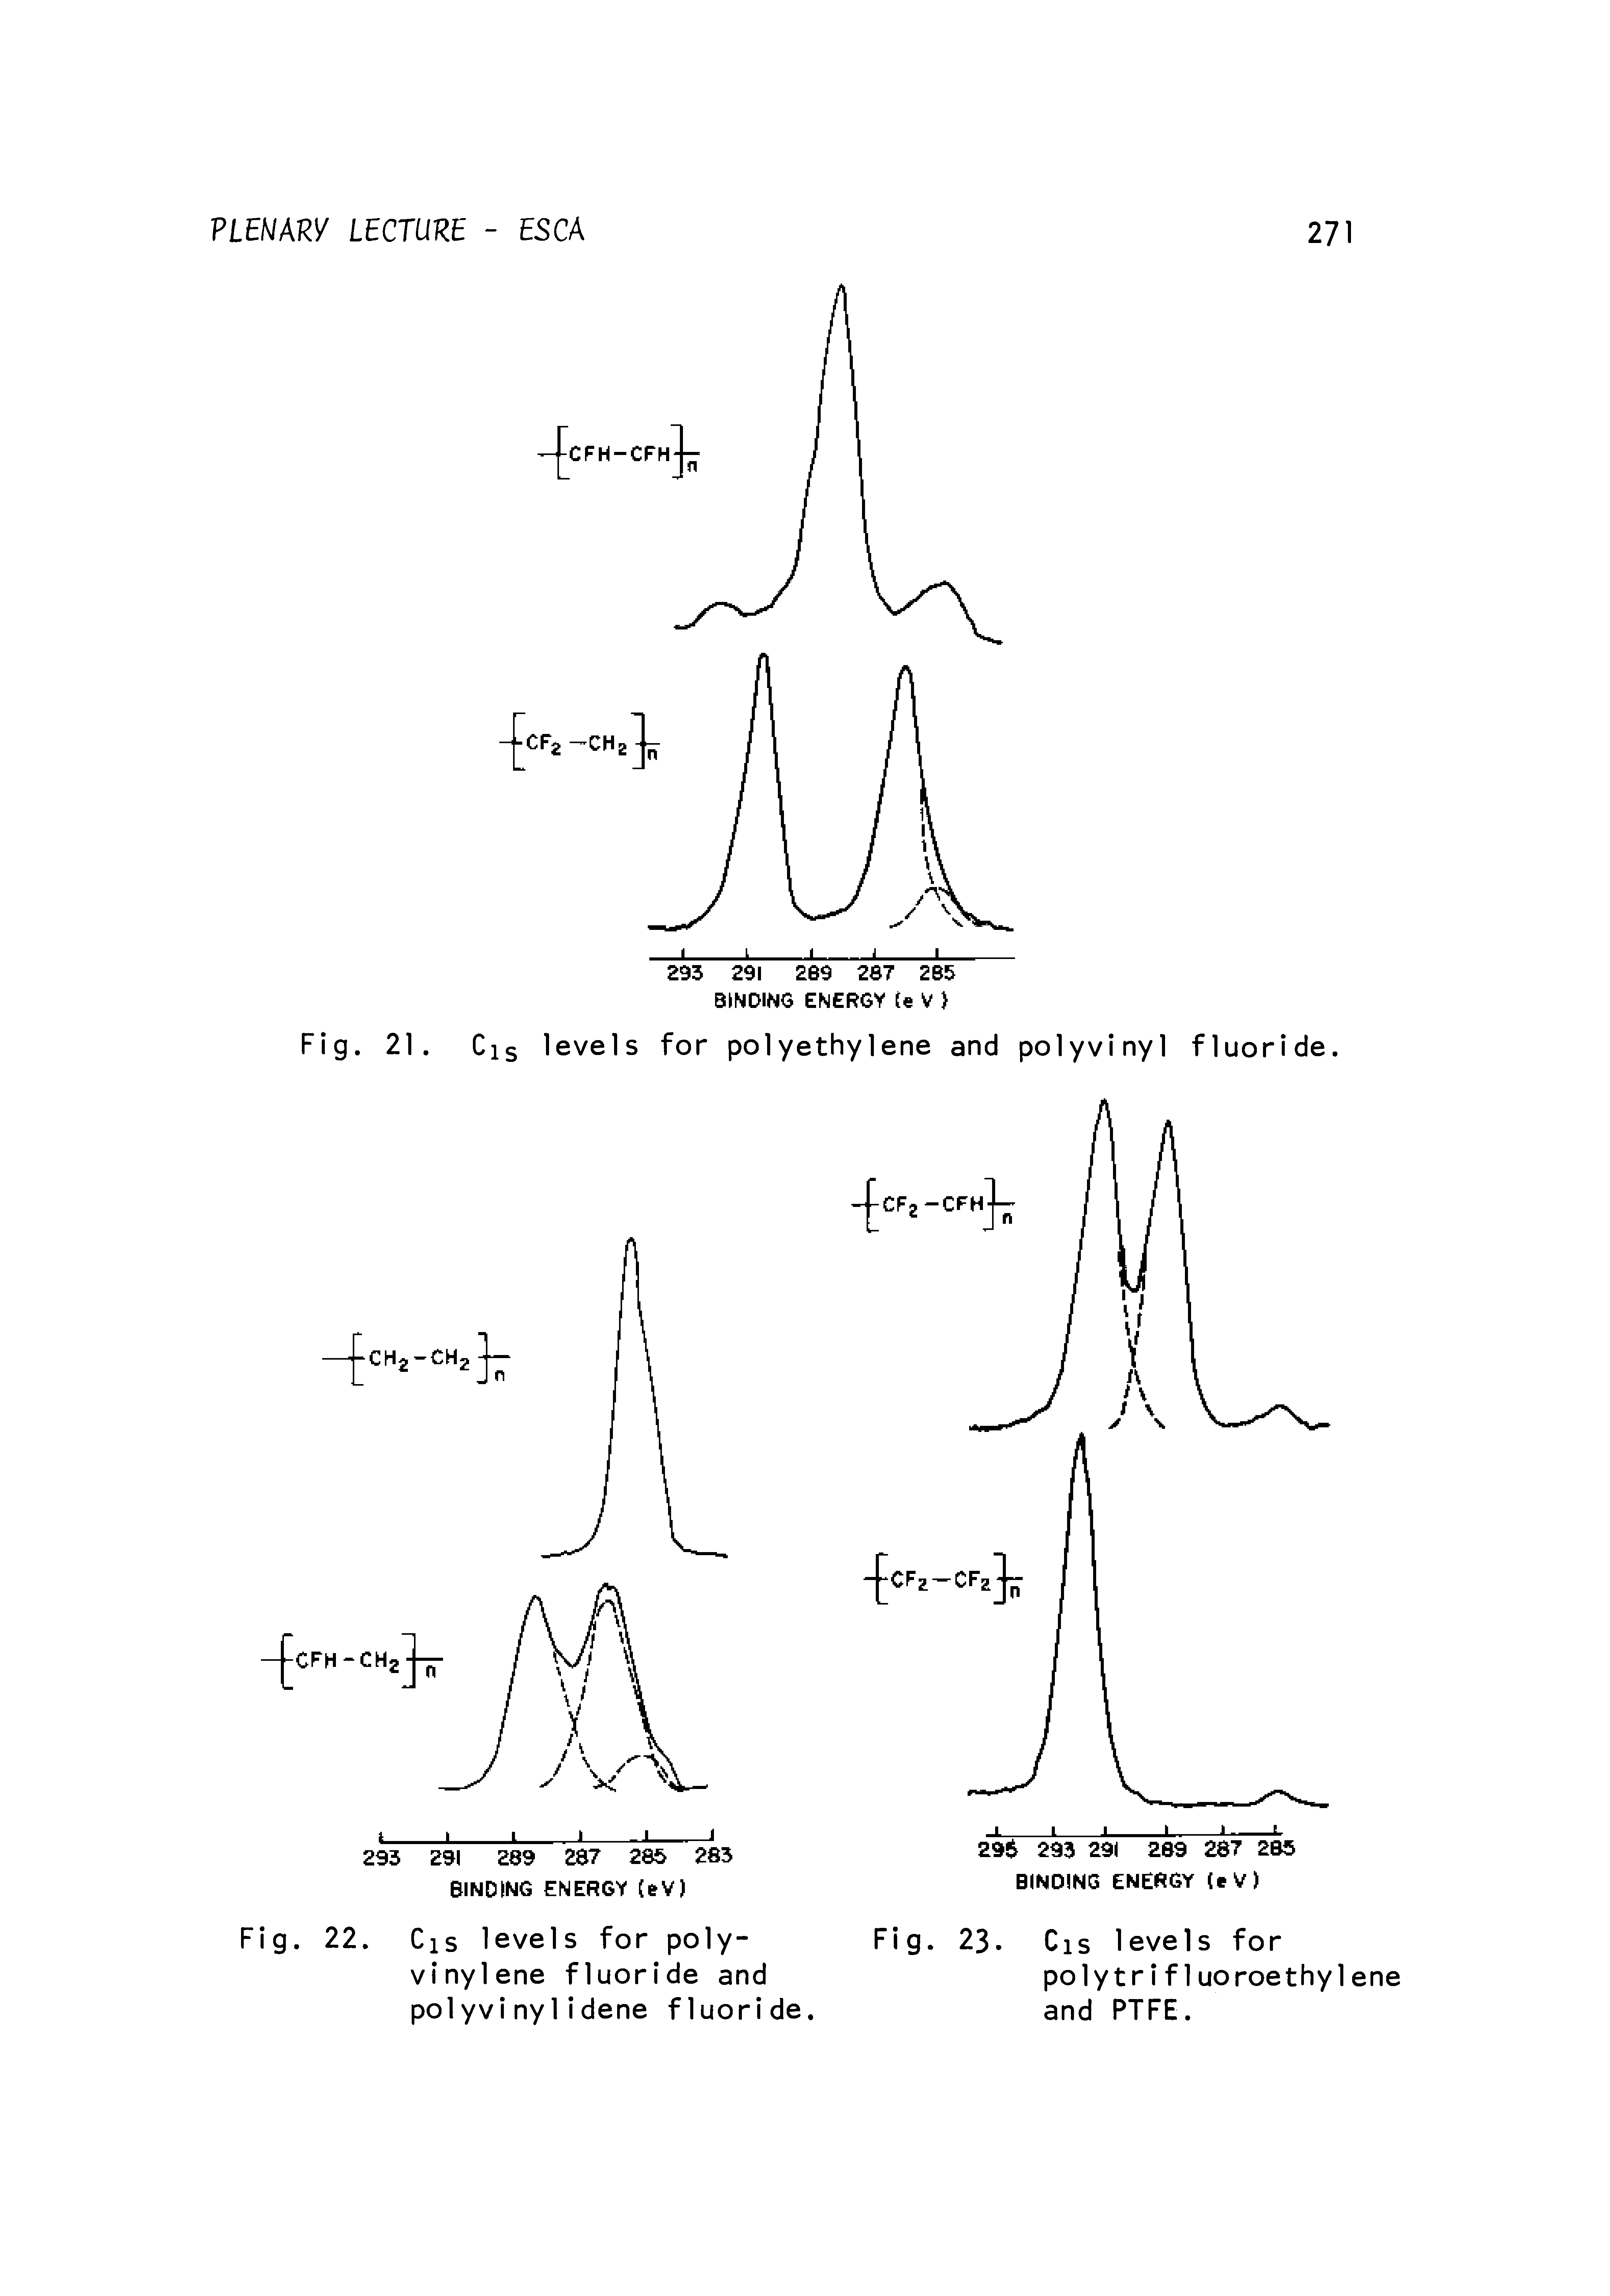 Fig. 22. Cis levels for poly-vinylene fluoride and polyvinylidene fluoride.